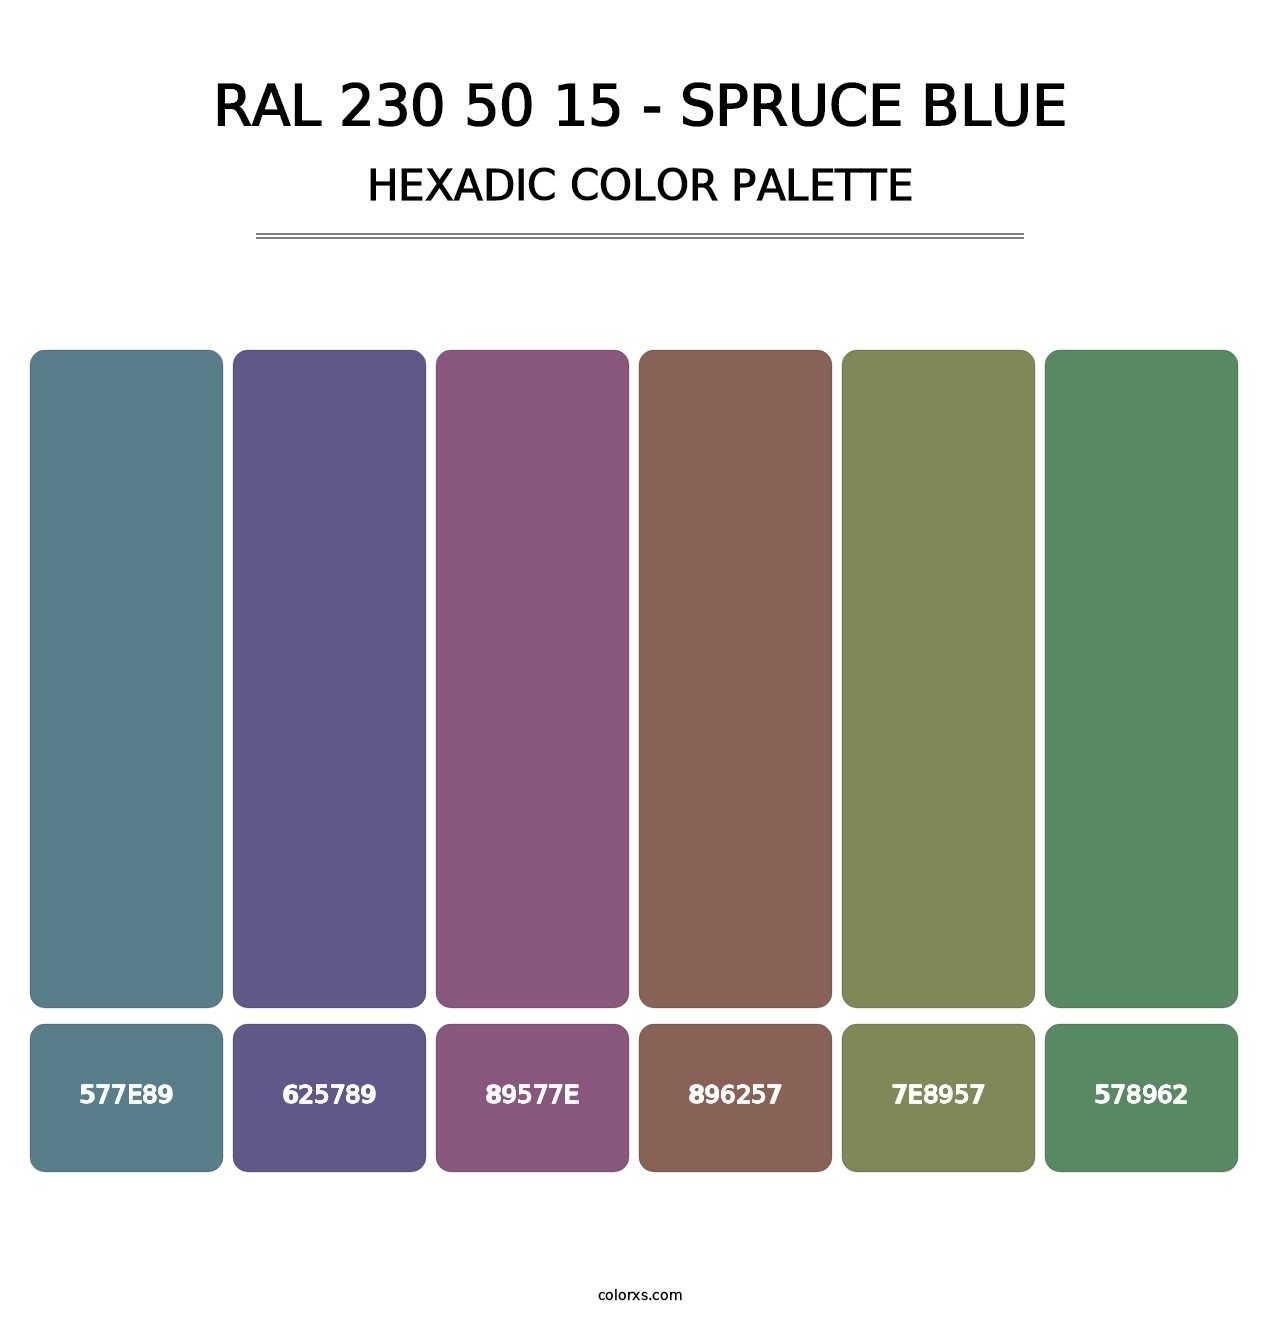 RAL 230 50 15 - Spruce Blue - Hexadic Color Palette